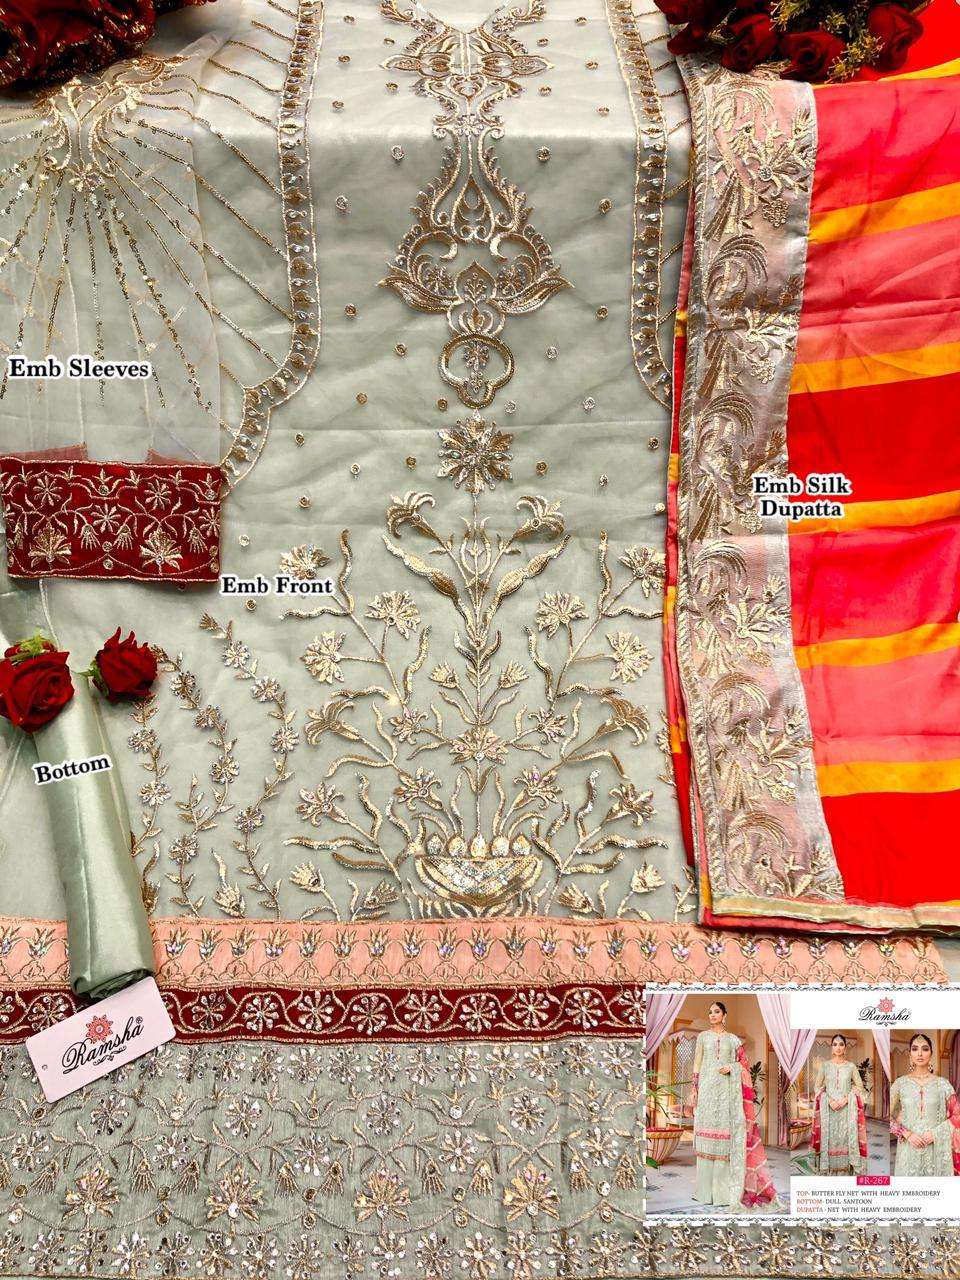 Ramsha Vol 1 R265 To R268 Series Designer Pakistani Suit Catalog